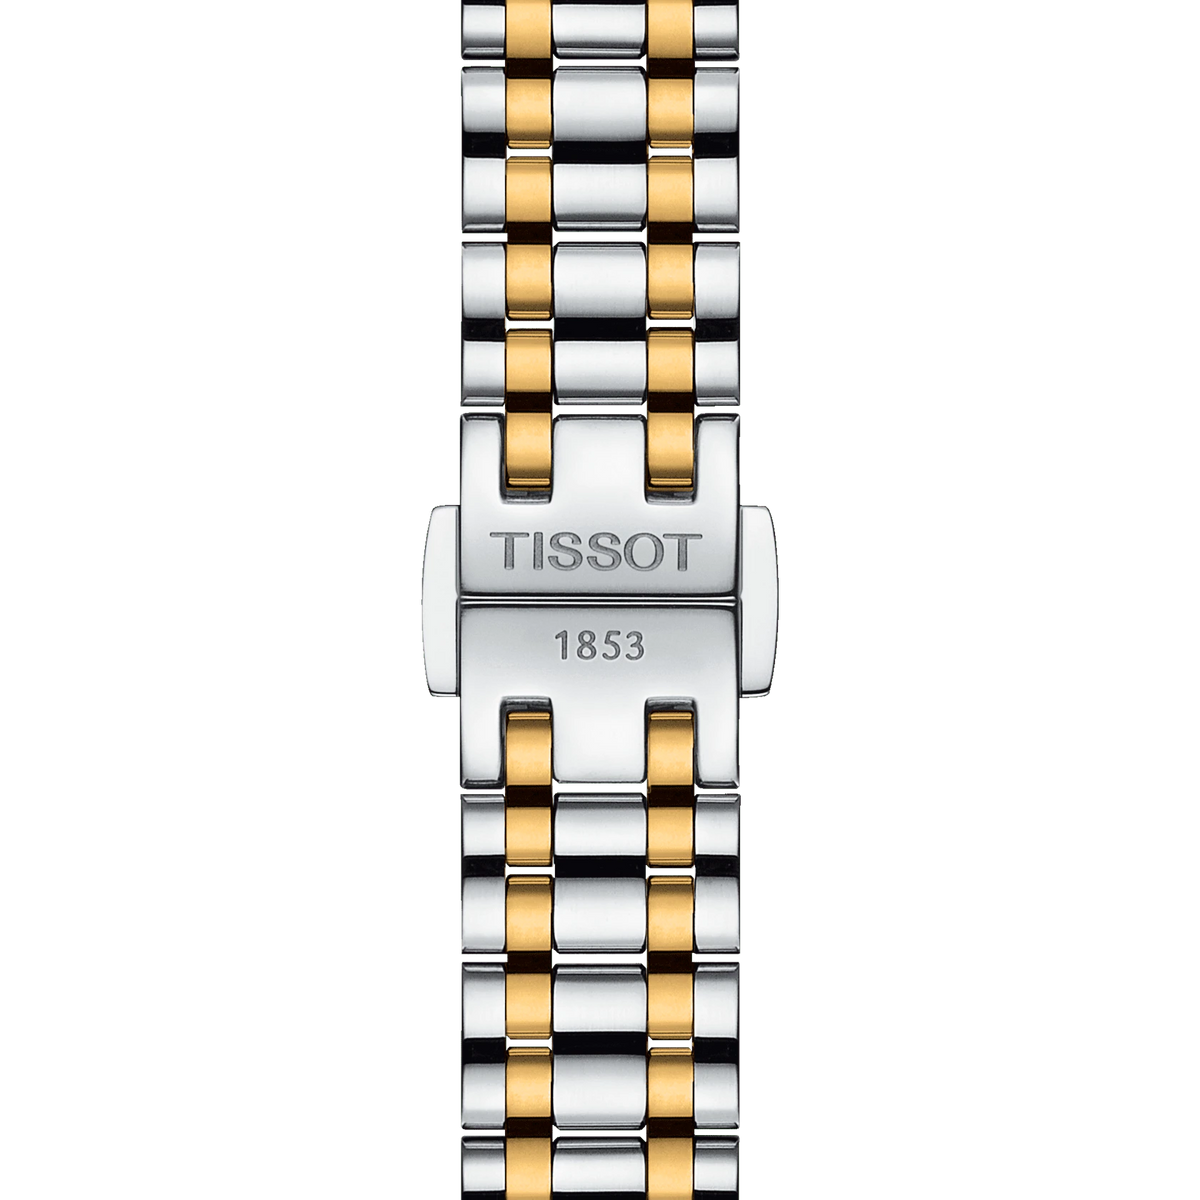 T-Lady Bellissima 26mm Ladies Watch T1260102201300